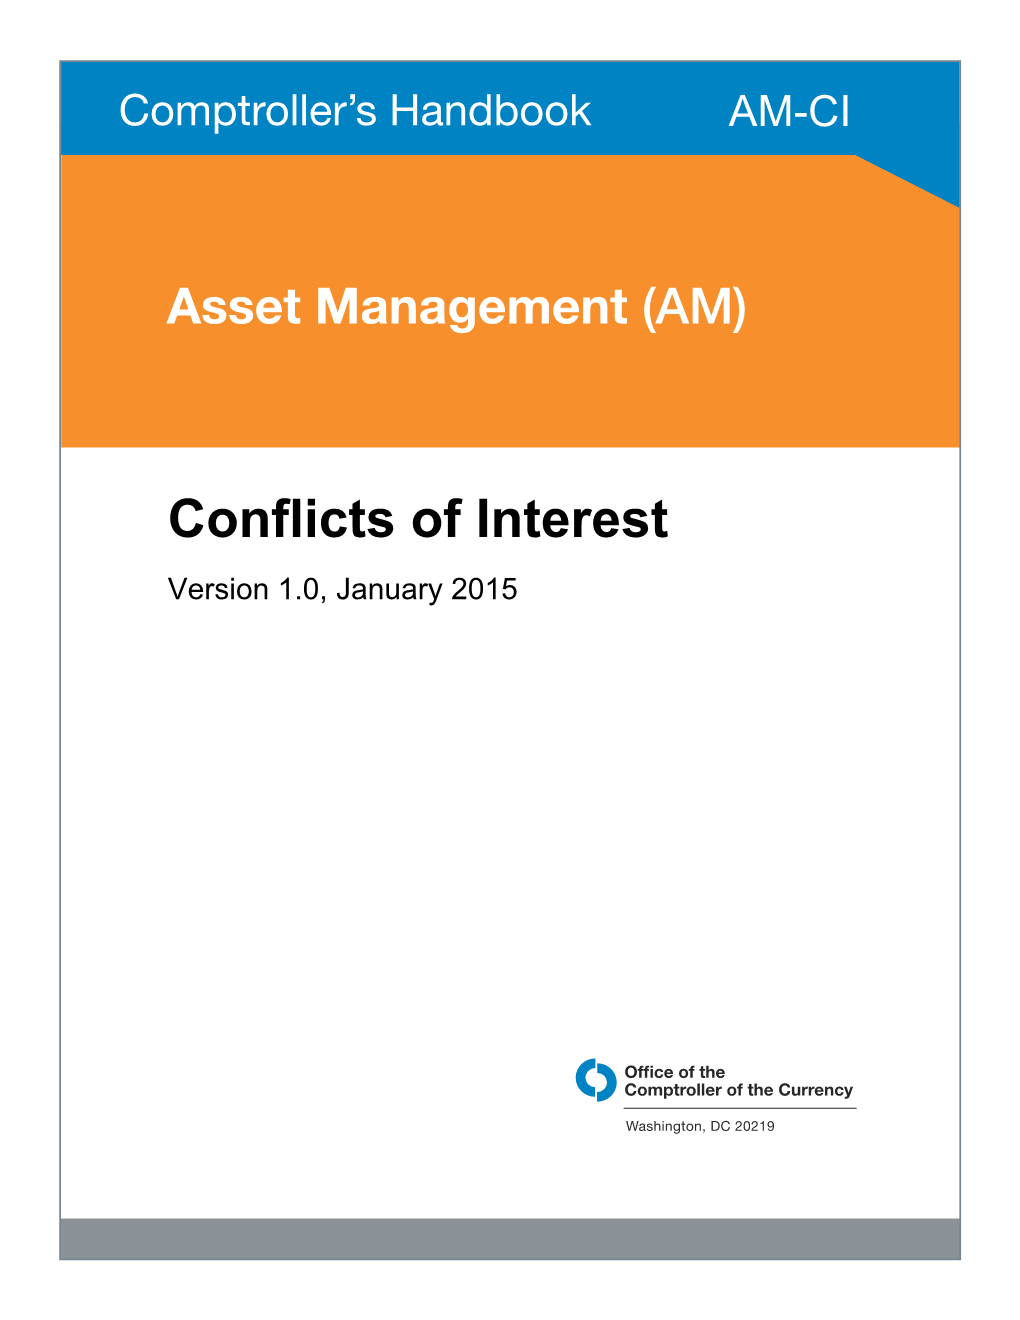 Comptroller's Handbook, Conflicts of Interest